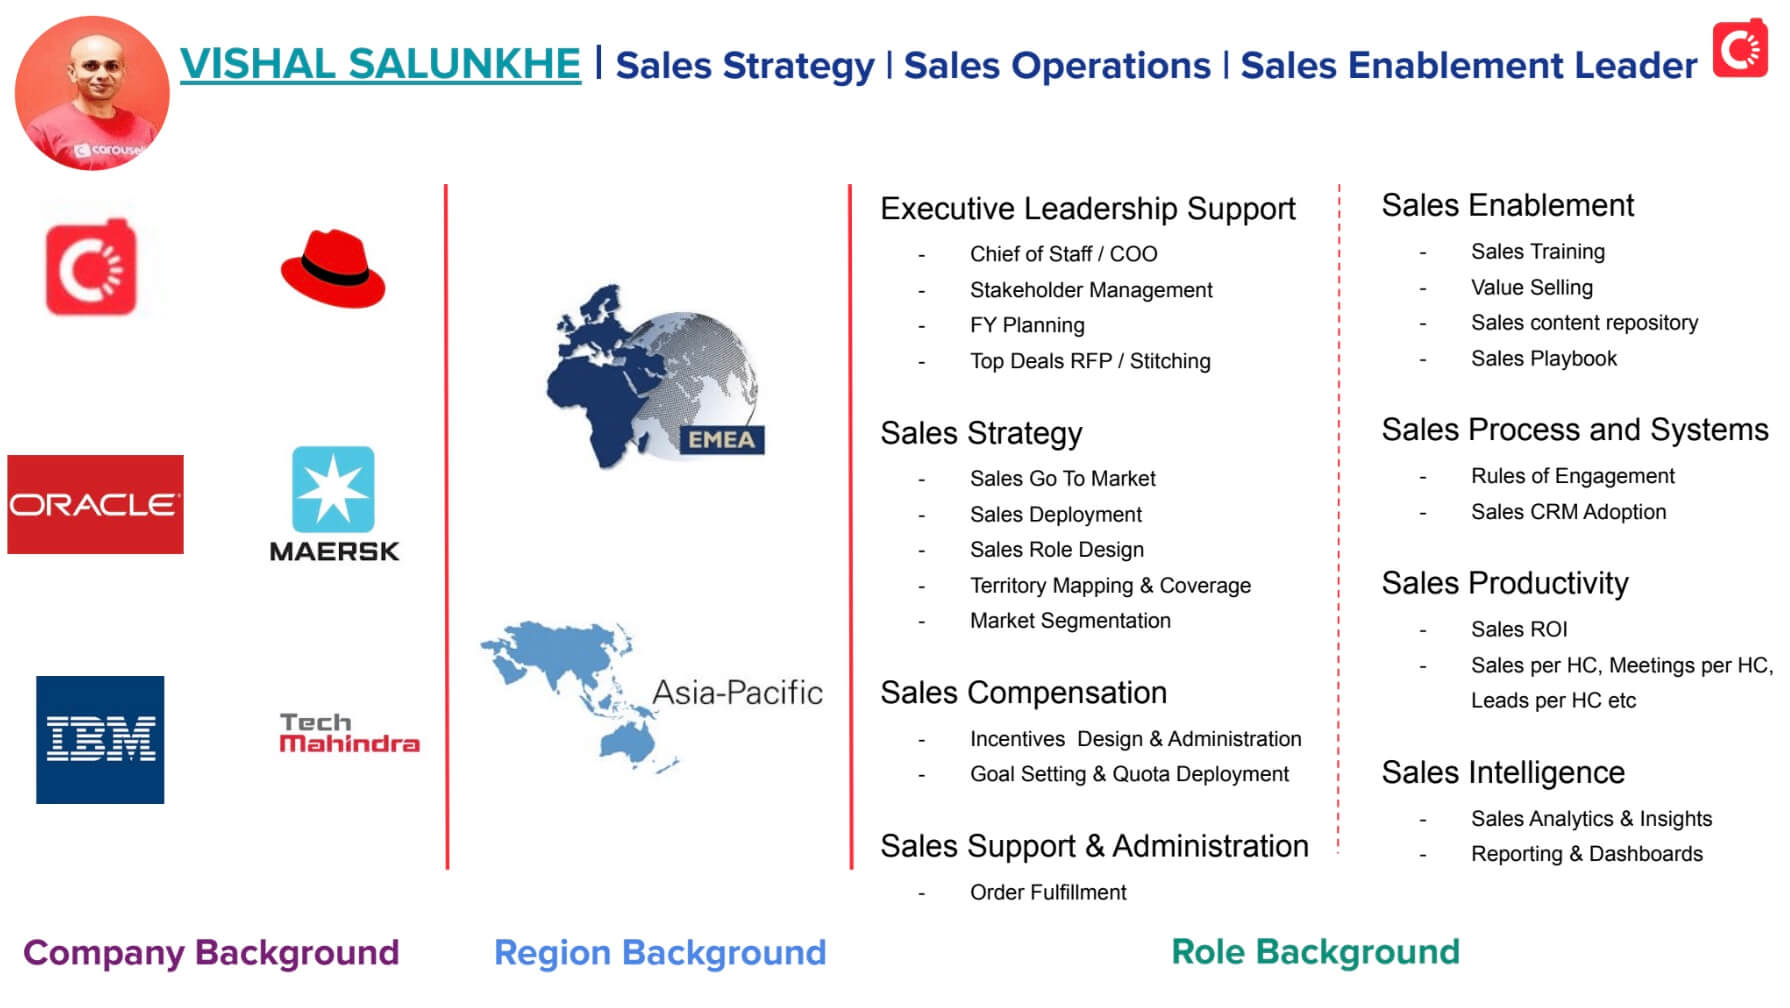 Vishal Salunkhe | Sales Strategy, Operations, Enablement Leader